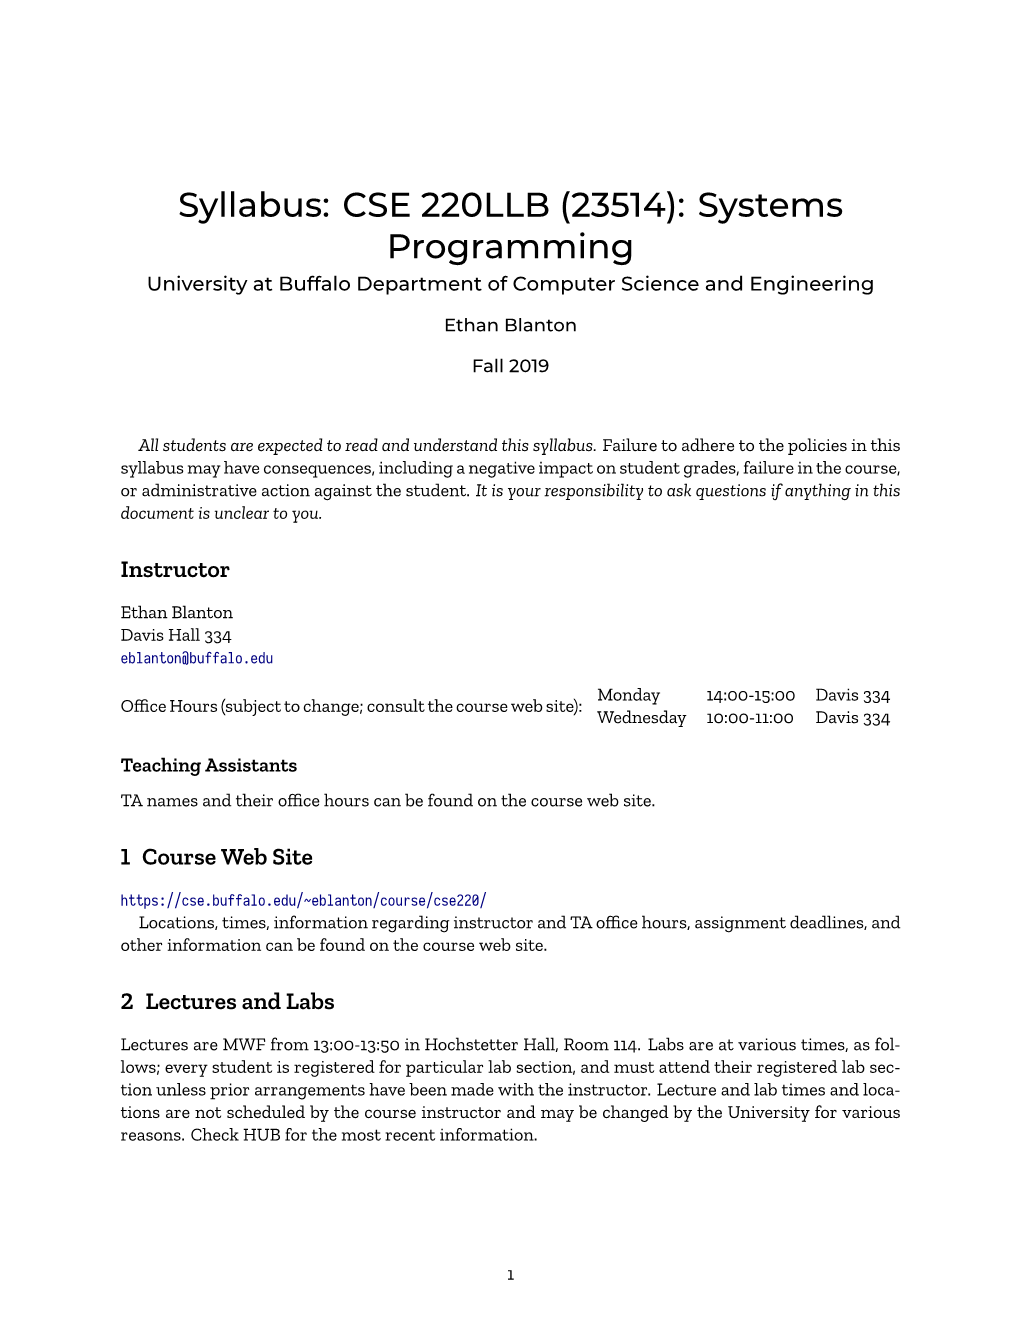 Syllabus: CSE 220LLB (23514): Systems Programming University at Buffalo Department of Computer Science and Engineering